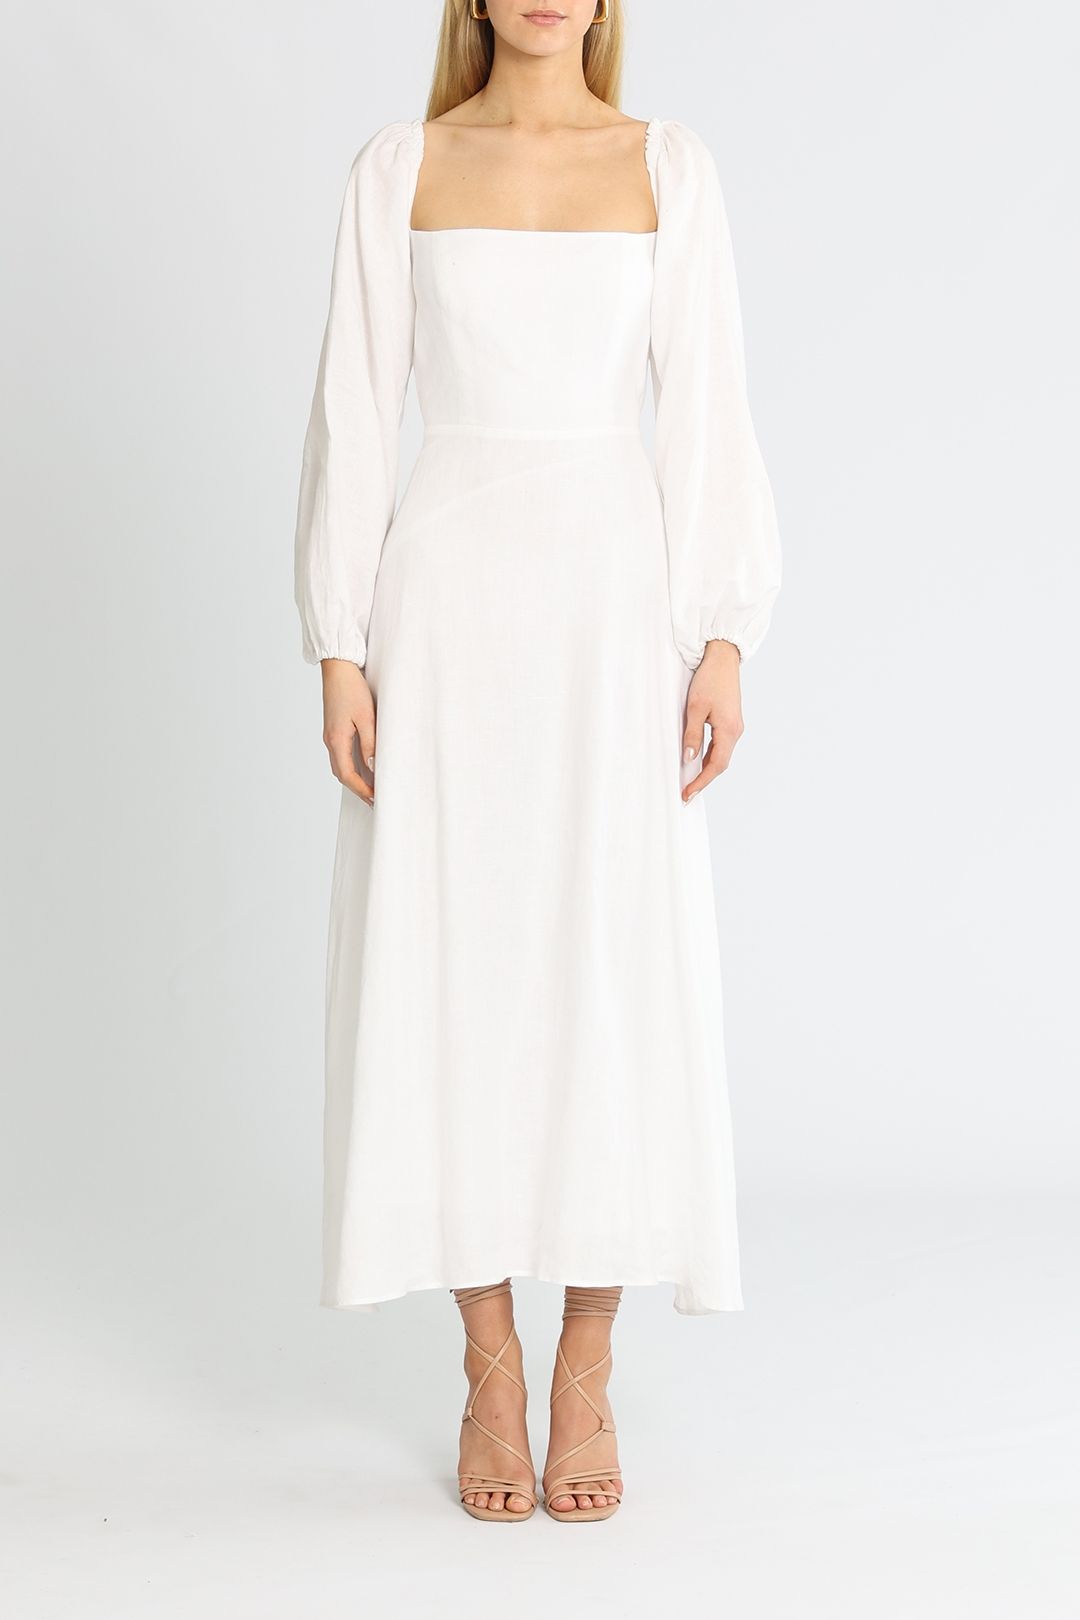 Jillian Boustred Frankie Maxi Dress White